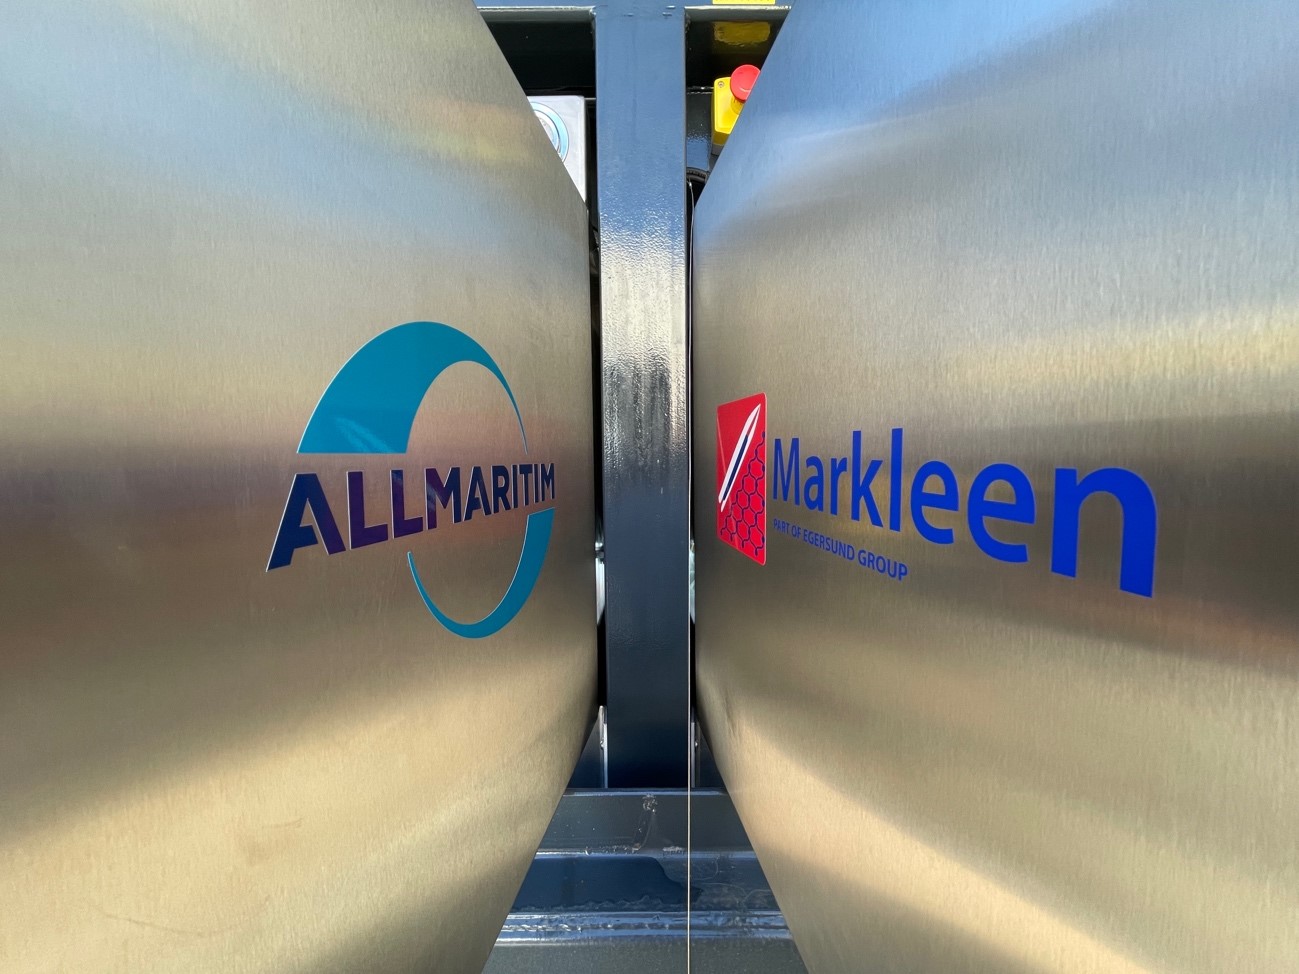 Post alianza | Markleen + AllMaritim + NOFI = Leader supplier of oil spill response solutions